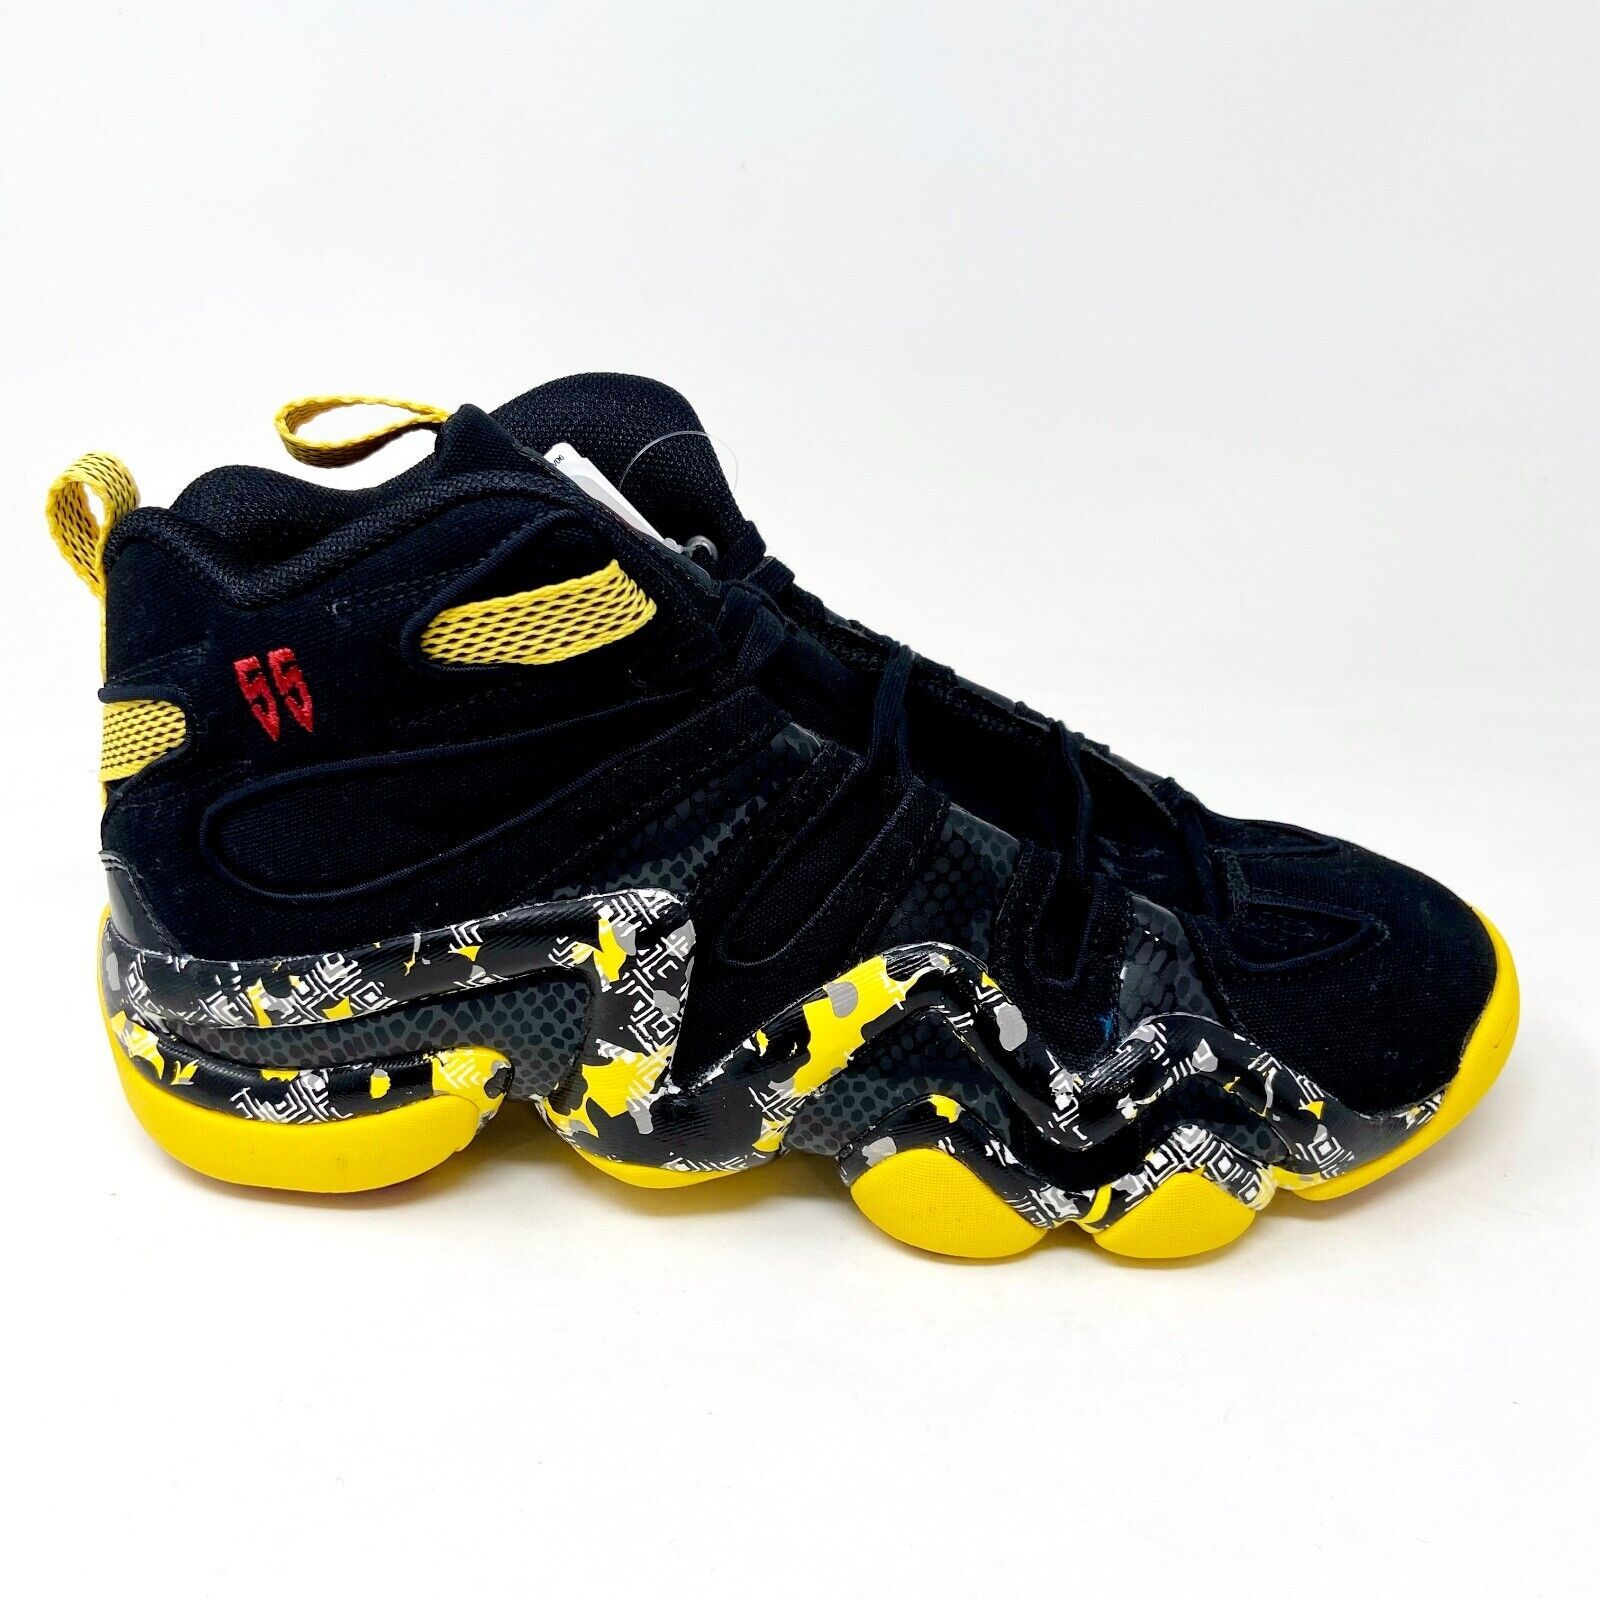 Adidas Equipment Crazy 8 Mutombo Black Yellow Mens Basketball Sneakers C75766